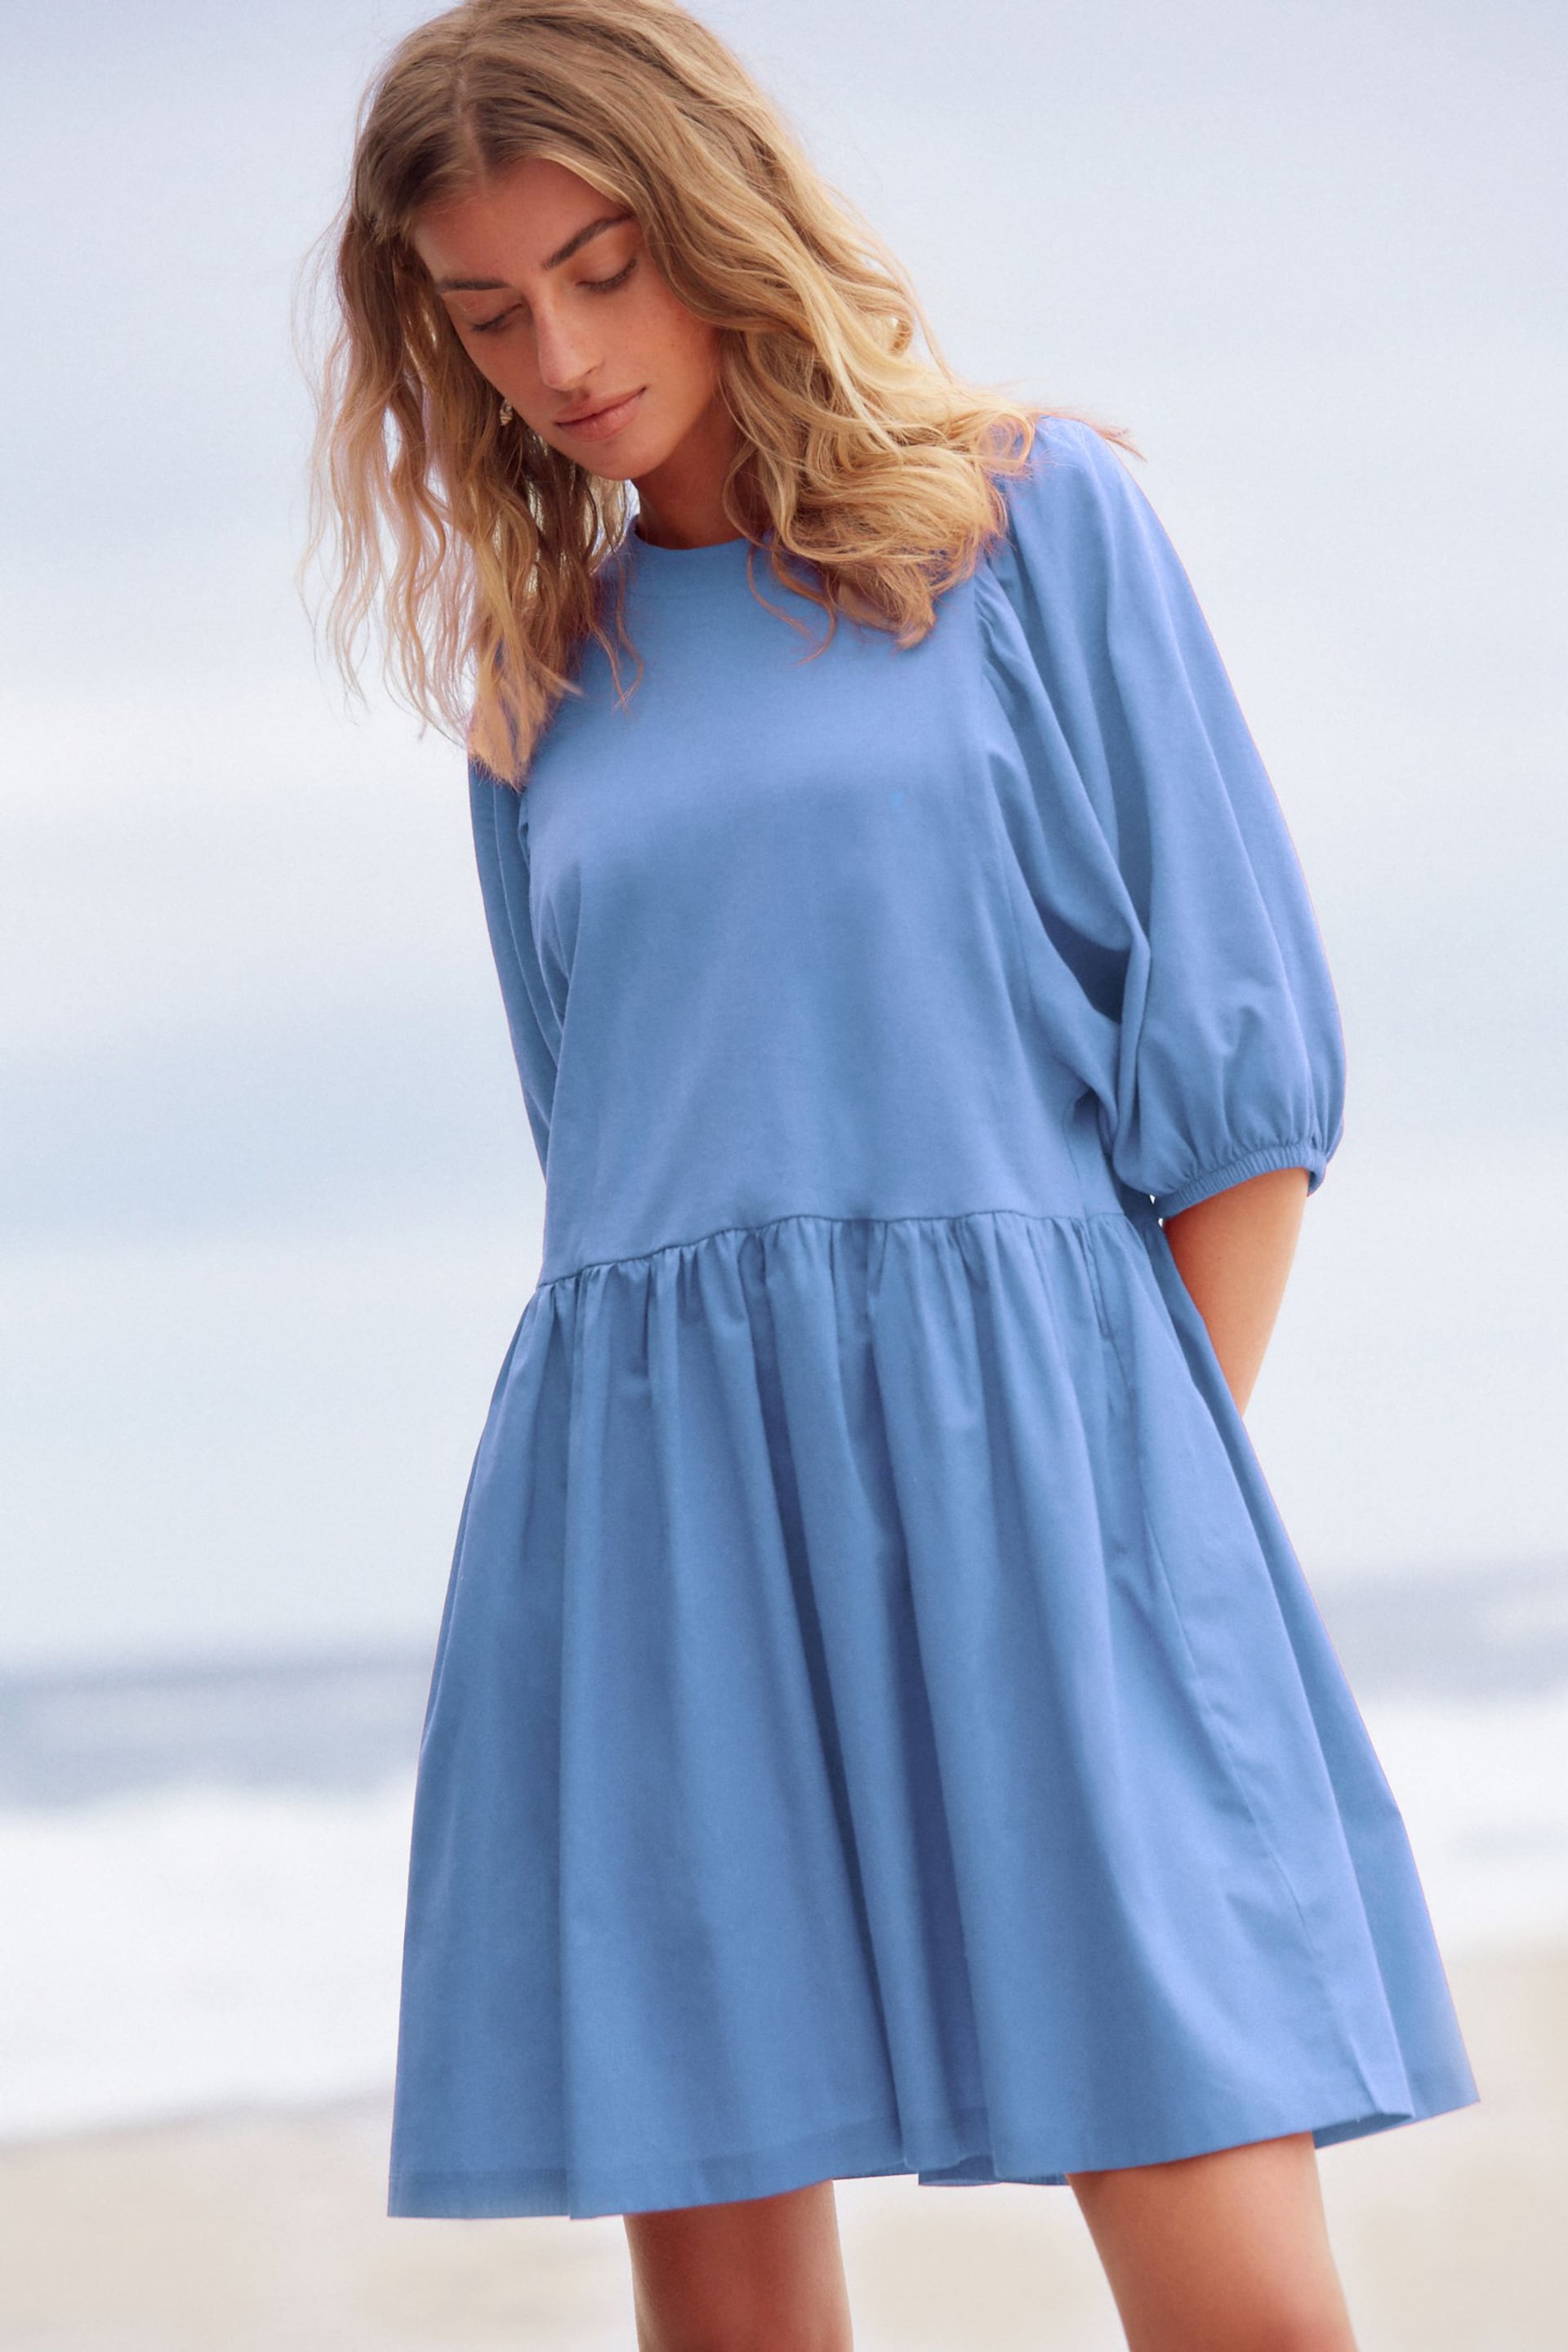 Blue Puff Sleeve Mini Jersey Dress - Image 1 of 3